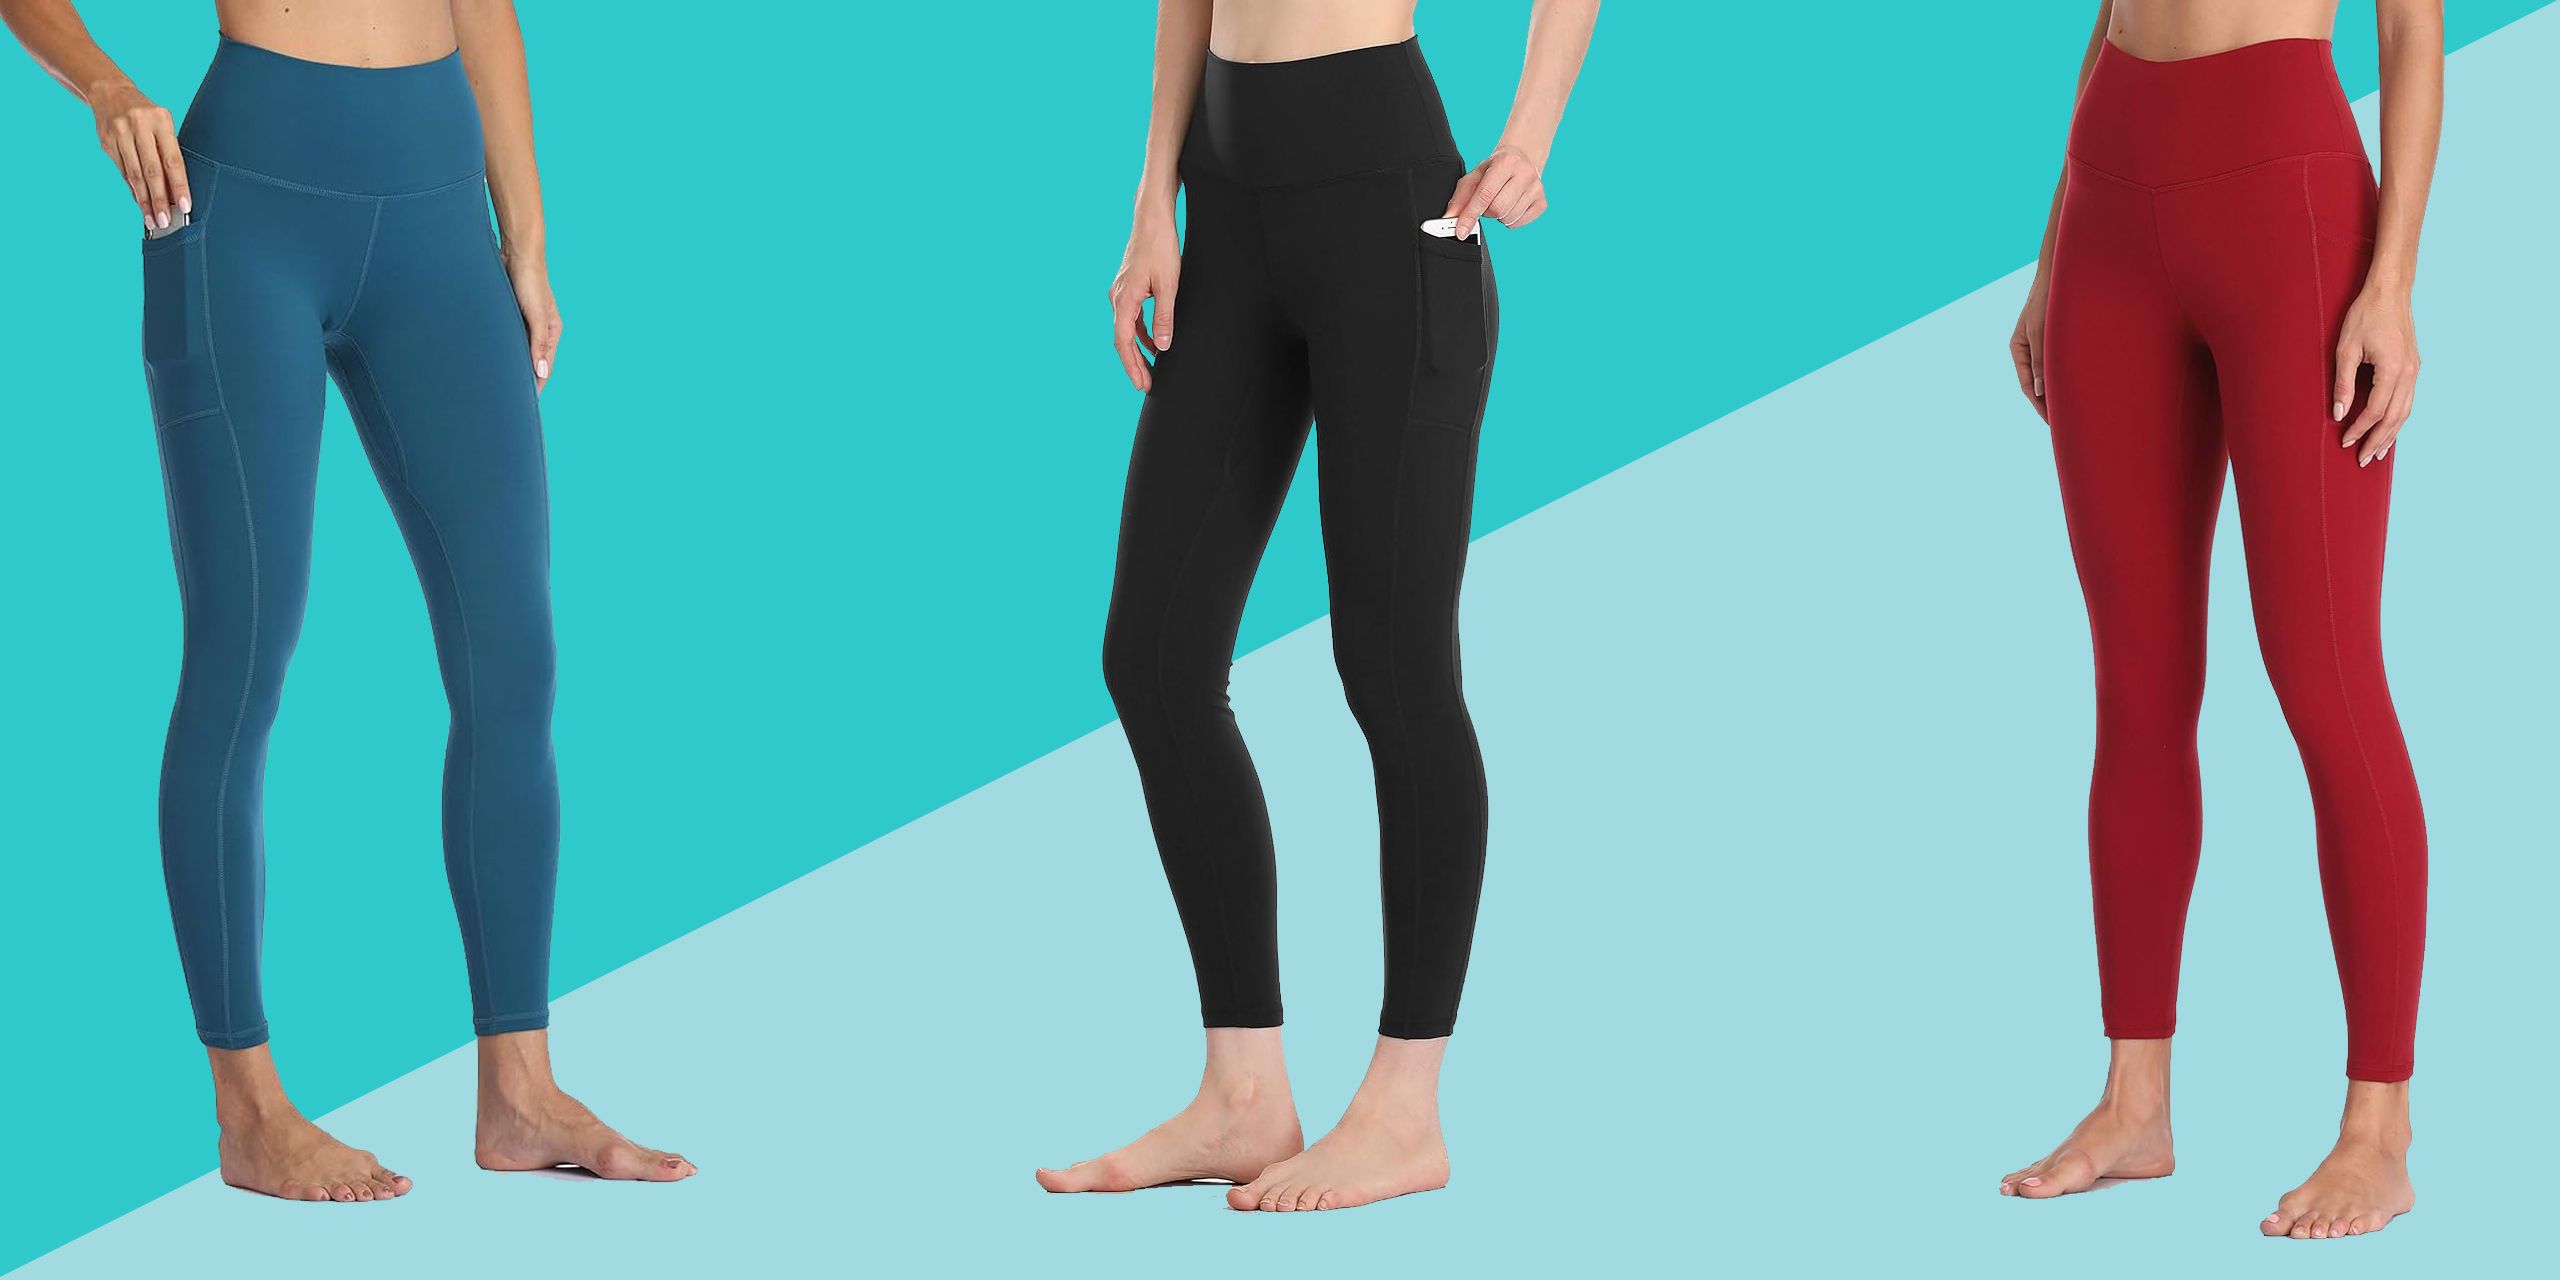 HOT Multicolor Best Fitting Yoga Leggings - Best Colored Flattering Yoga  Pants - What Devotion❓ - Coolest Online Fashion Trends